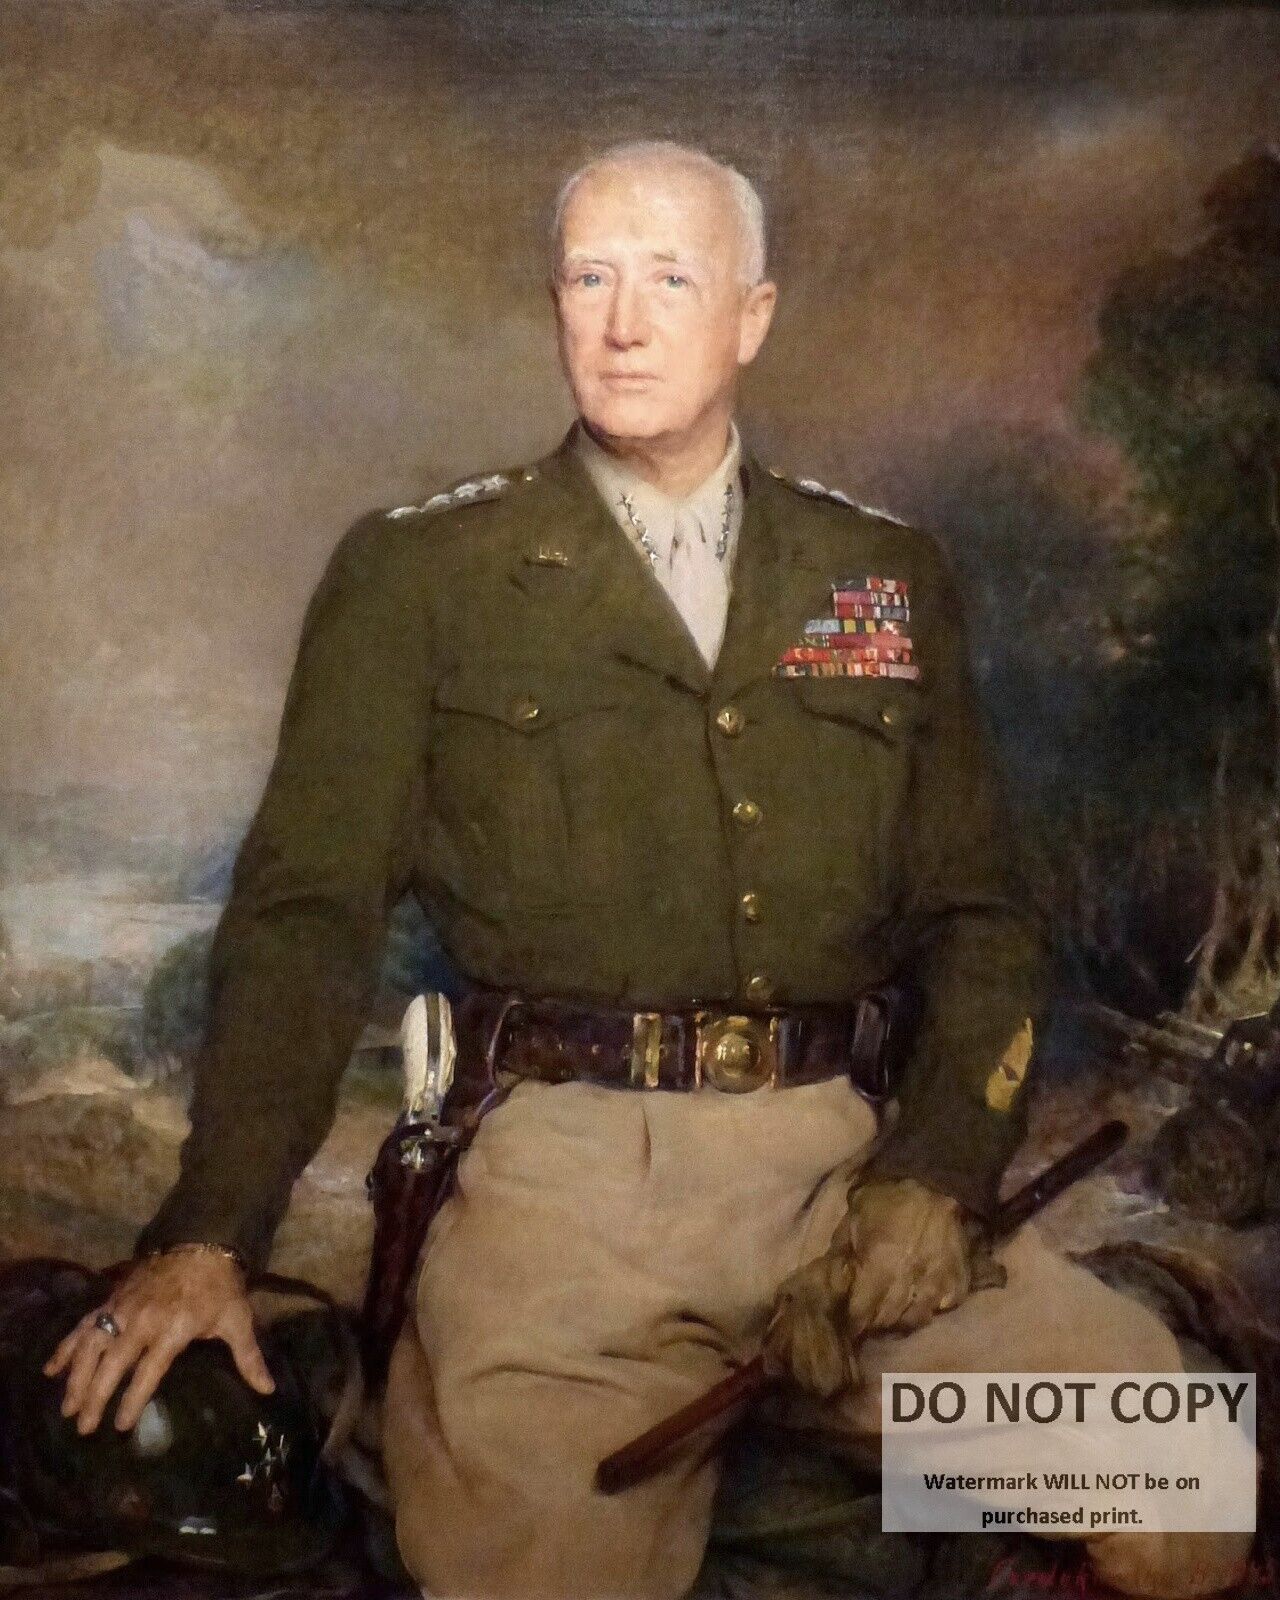 PORTRAIT OF GENERAL GEORGE S. PATTON - 8X10 REPRINT PHOTO (YW009)